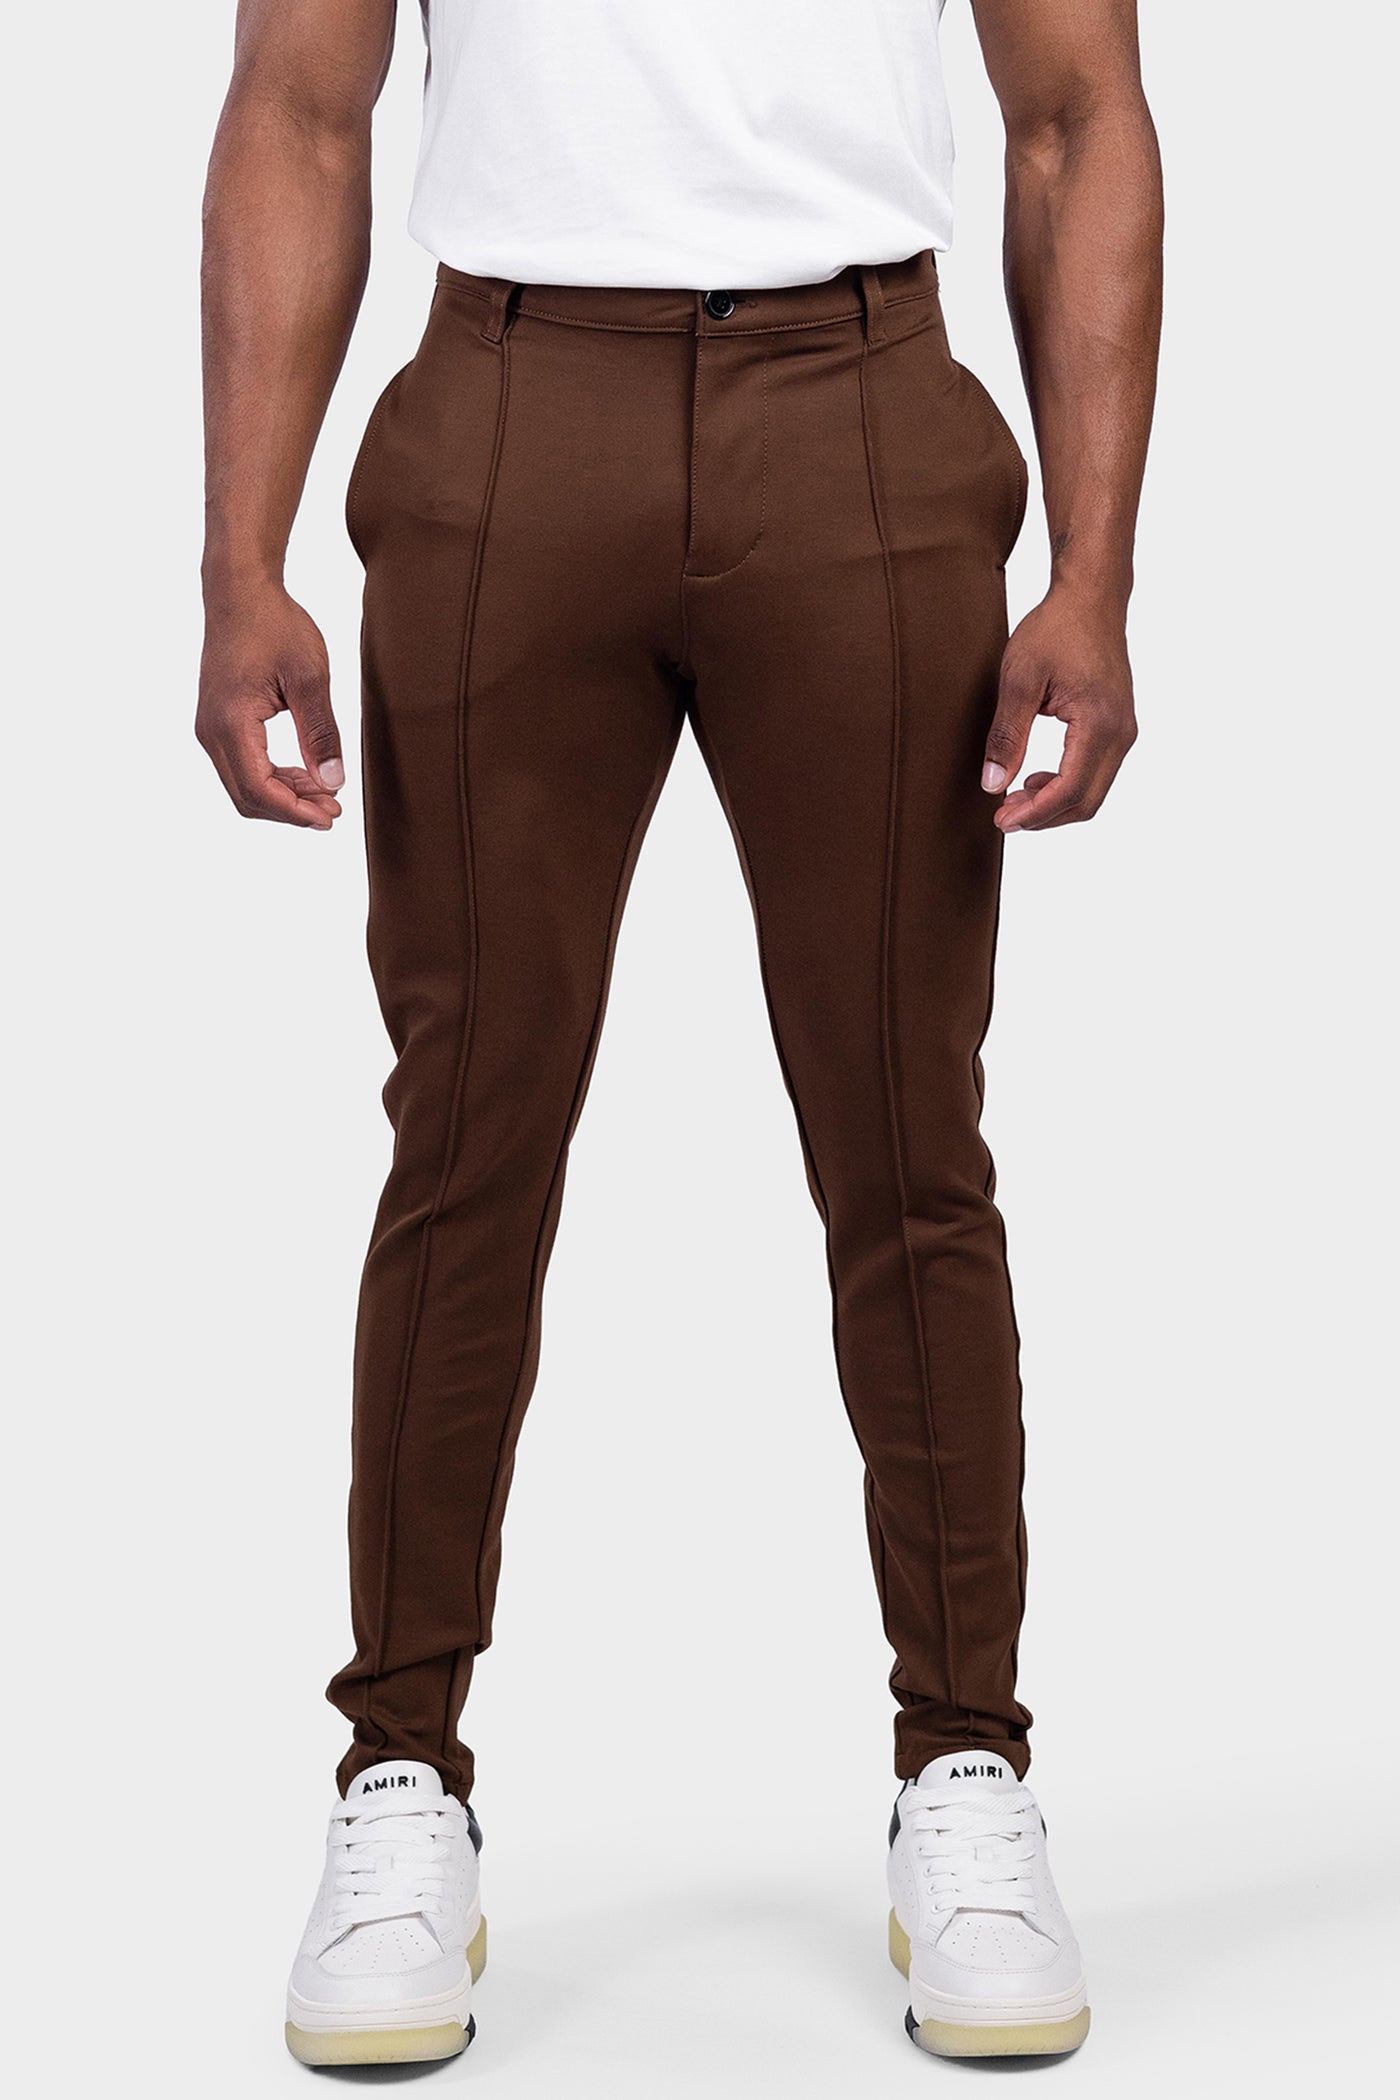 Men's Brown Pants, Dave Brown Pants, New Chapter